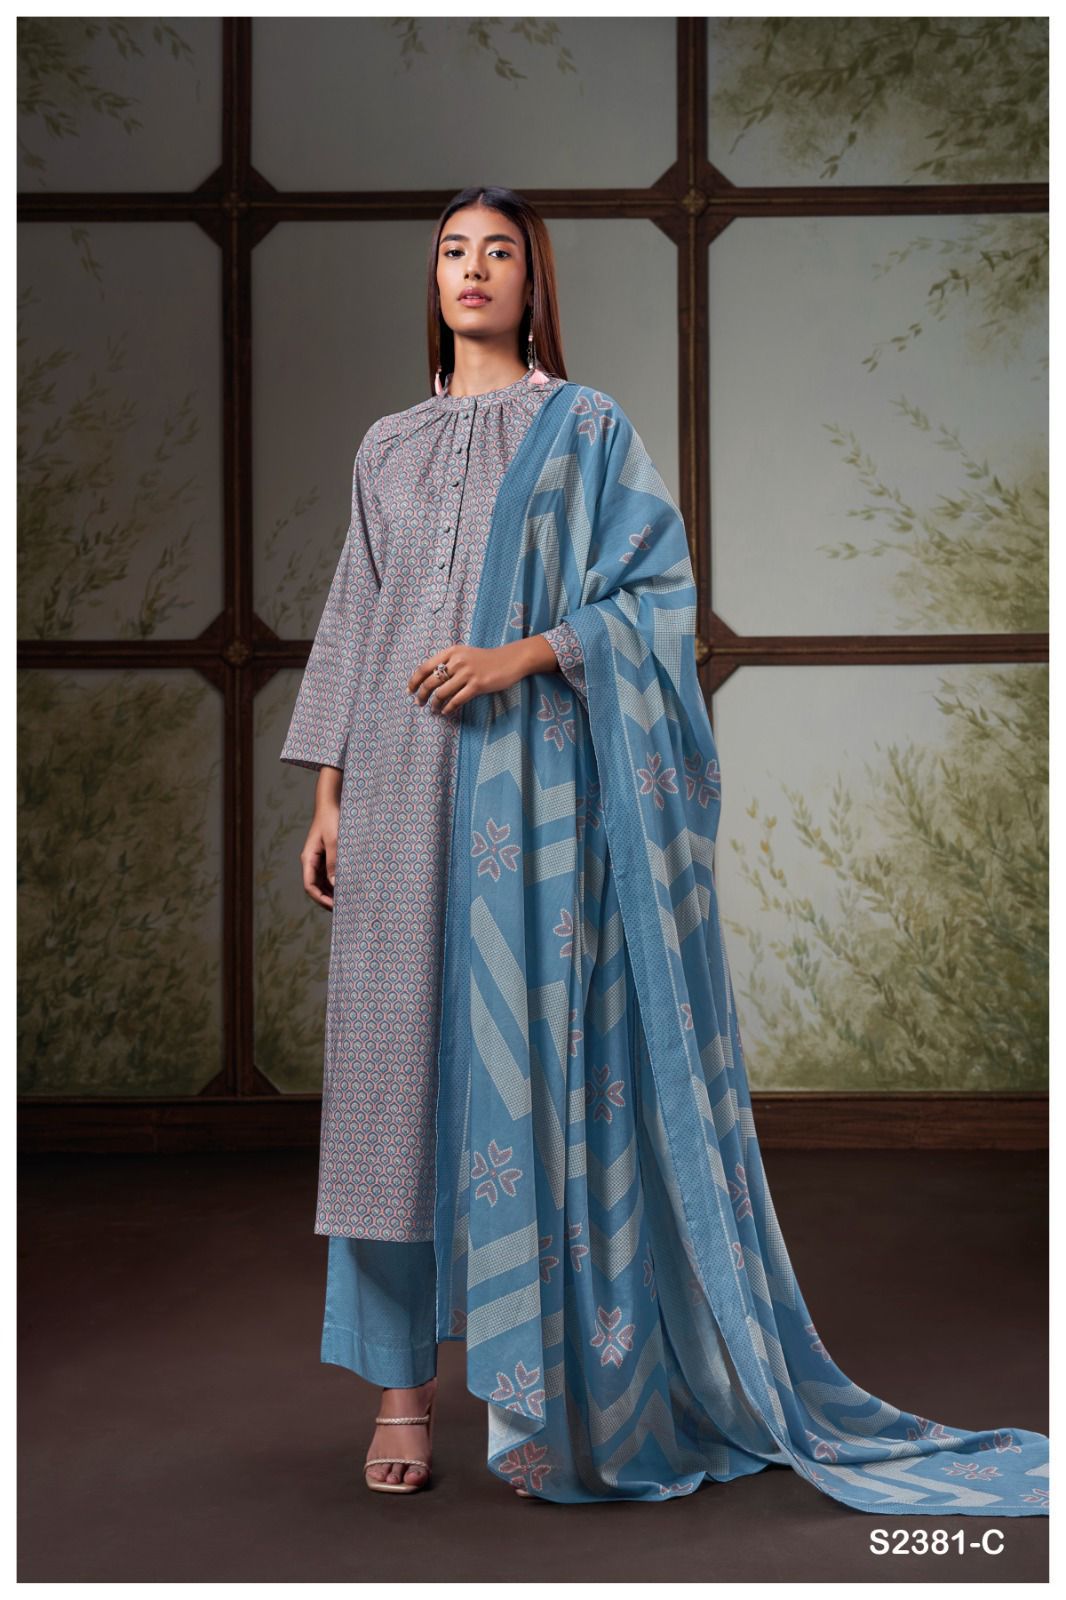 Harriet-2381 Ganga Premium Cotton Plazzo Style Suits